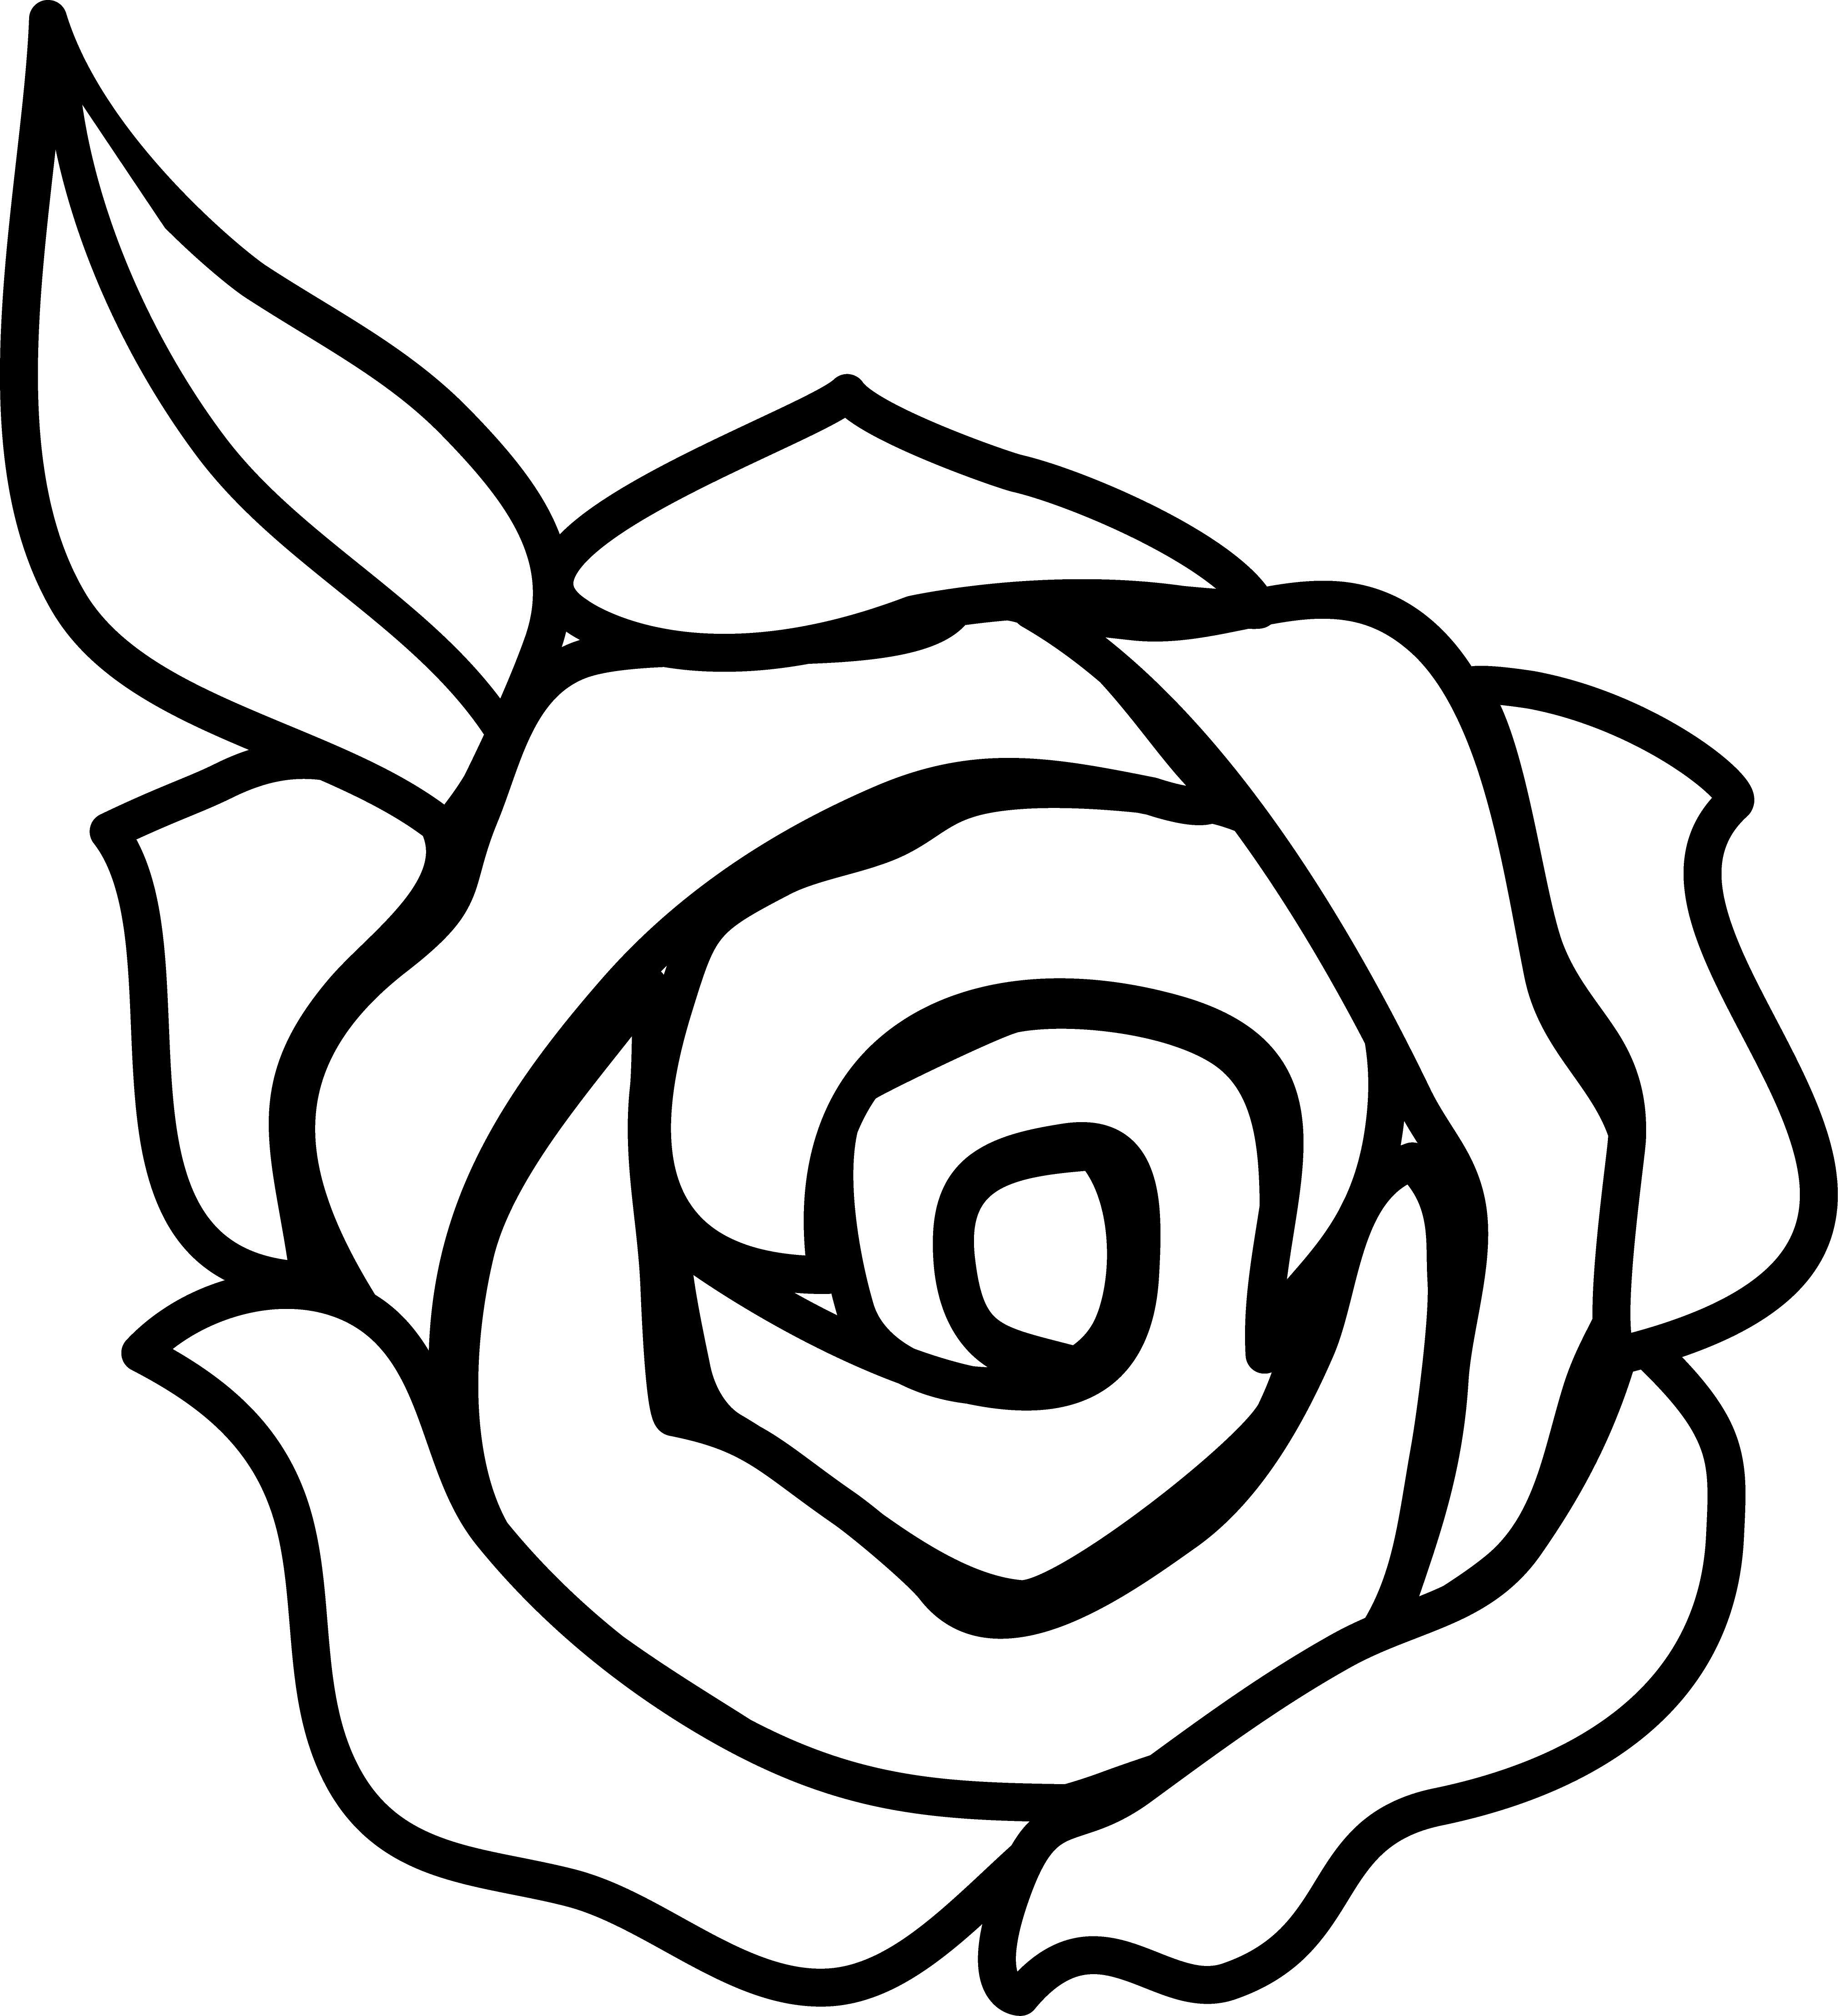 Black And White Rose Border Clip Art | Clipart Panda - Free ...